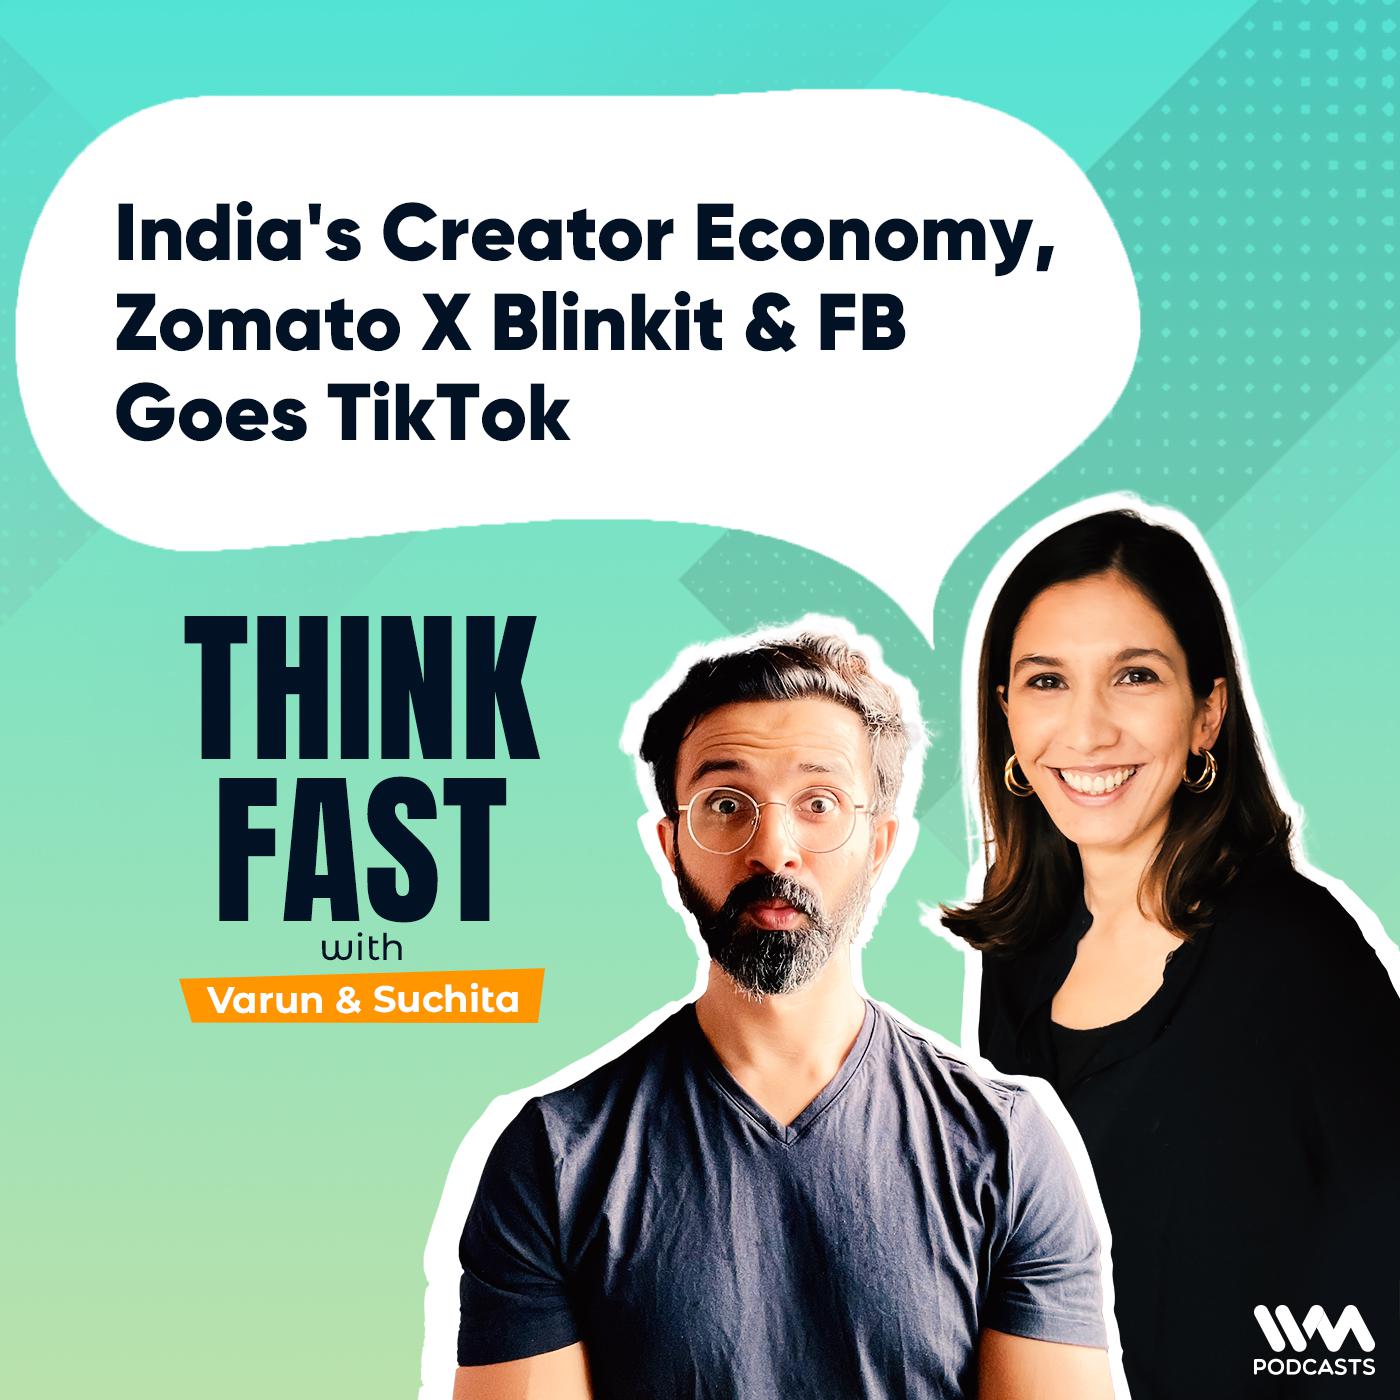 India's Creator Economy, Zomato X Blinkit & FB Goes TikTok